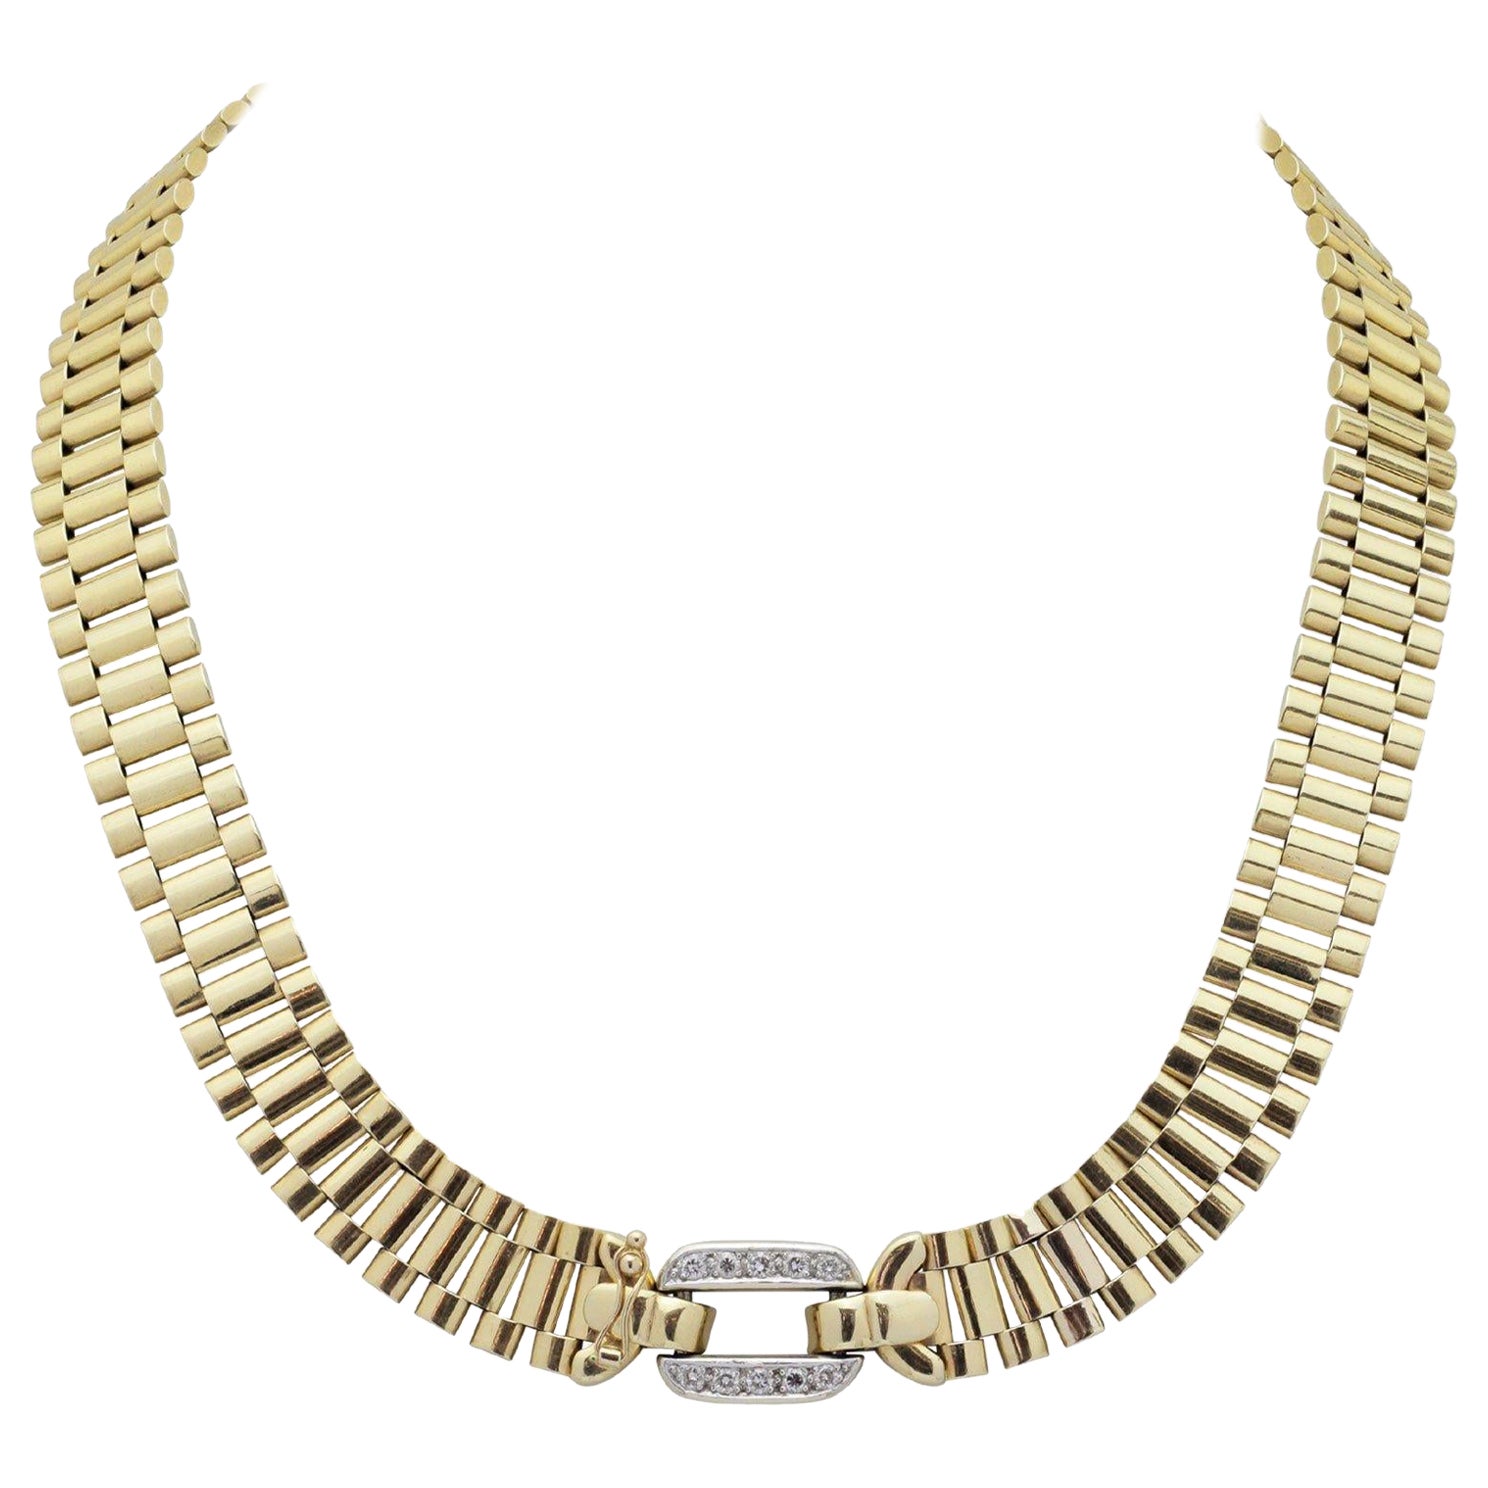 Italian 14 Karat Yellow Gold Rolex Link Style Necklace with Diamond Clasp